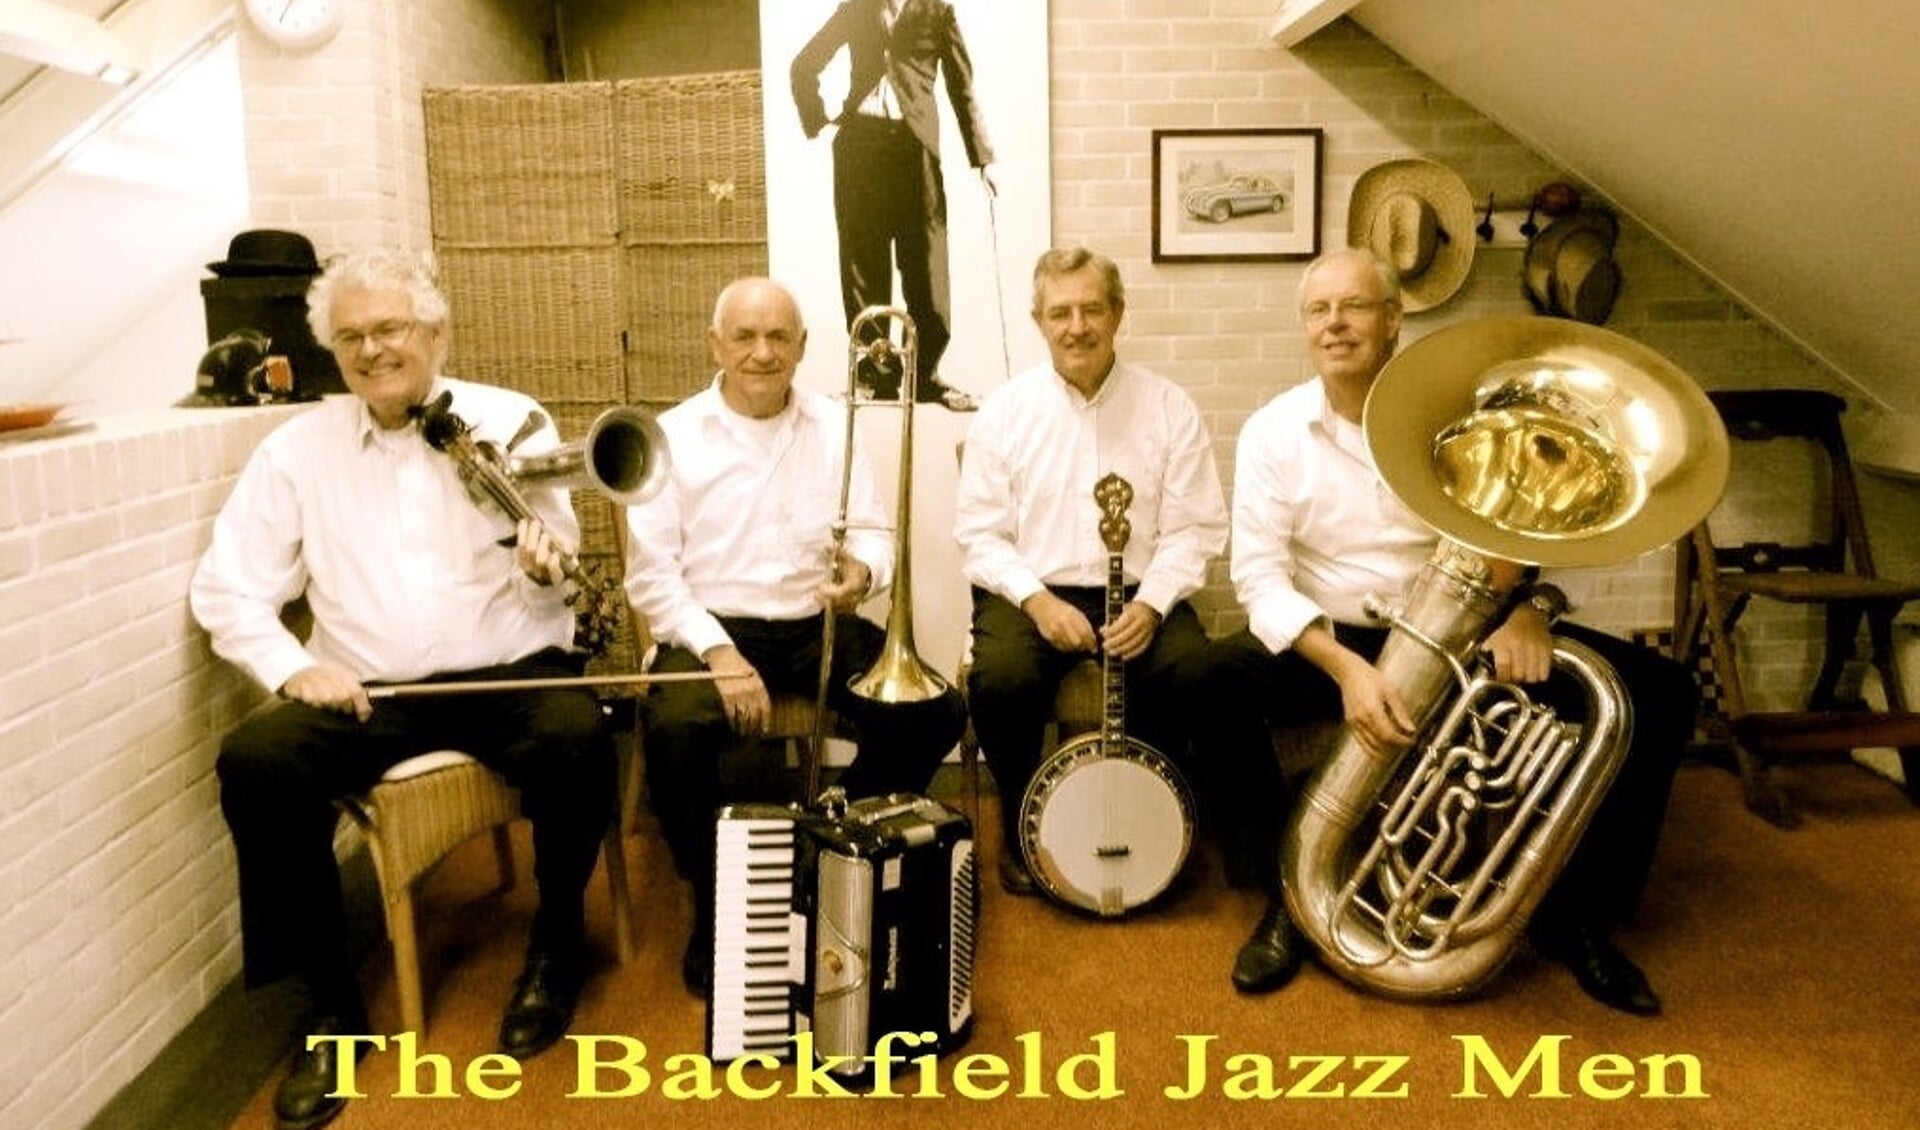 The Backfield Jazz Men